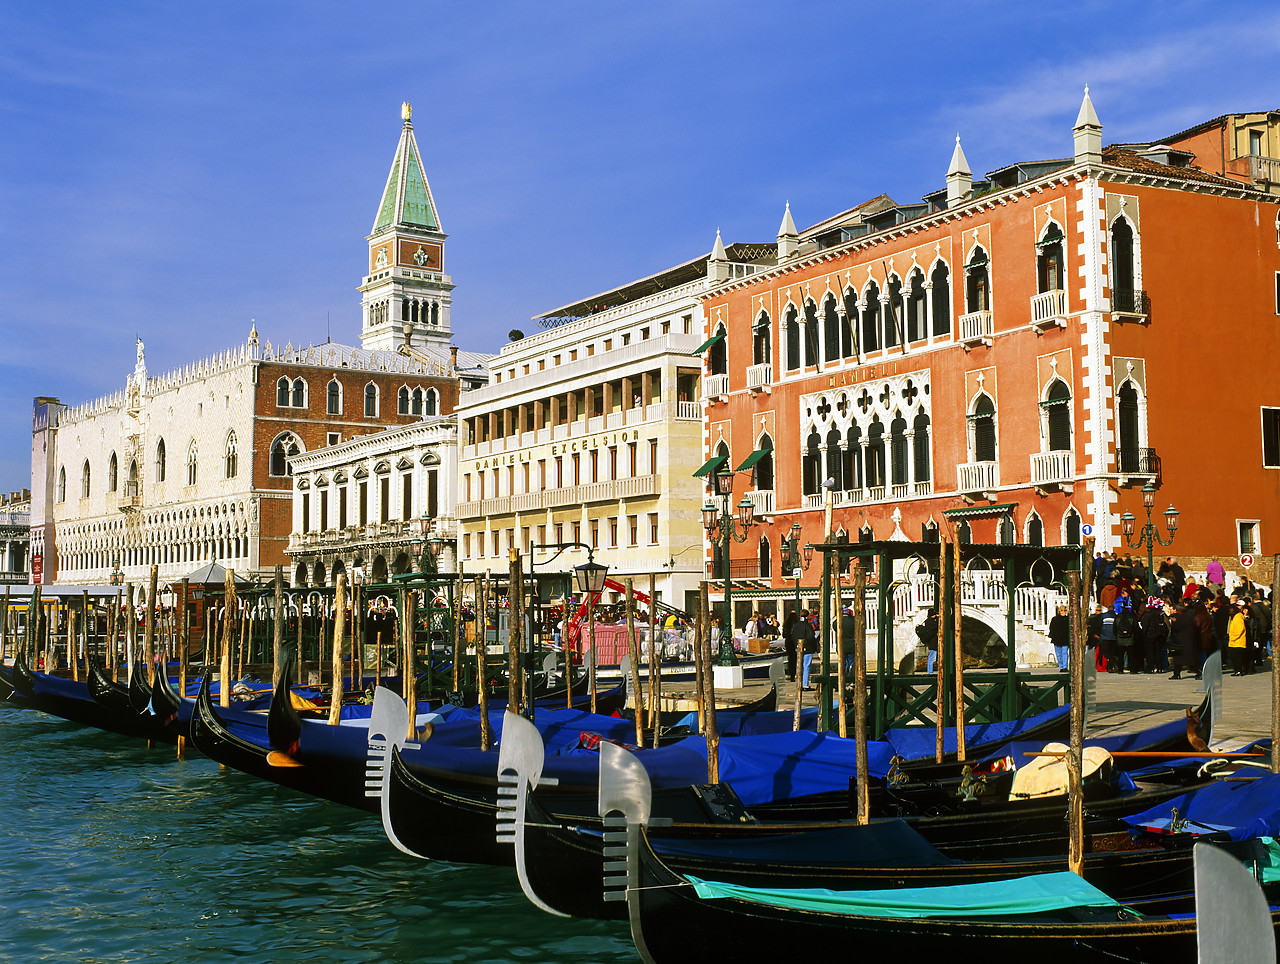 #990068-1 - Gondolas in Venice, Venice, Italy